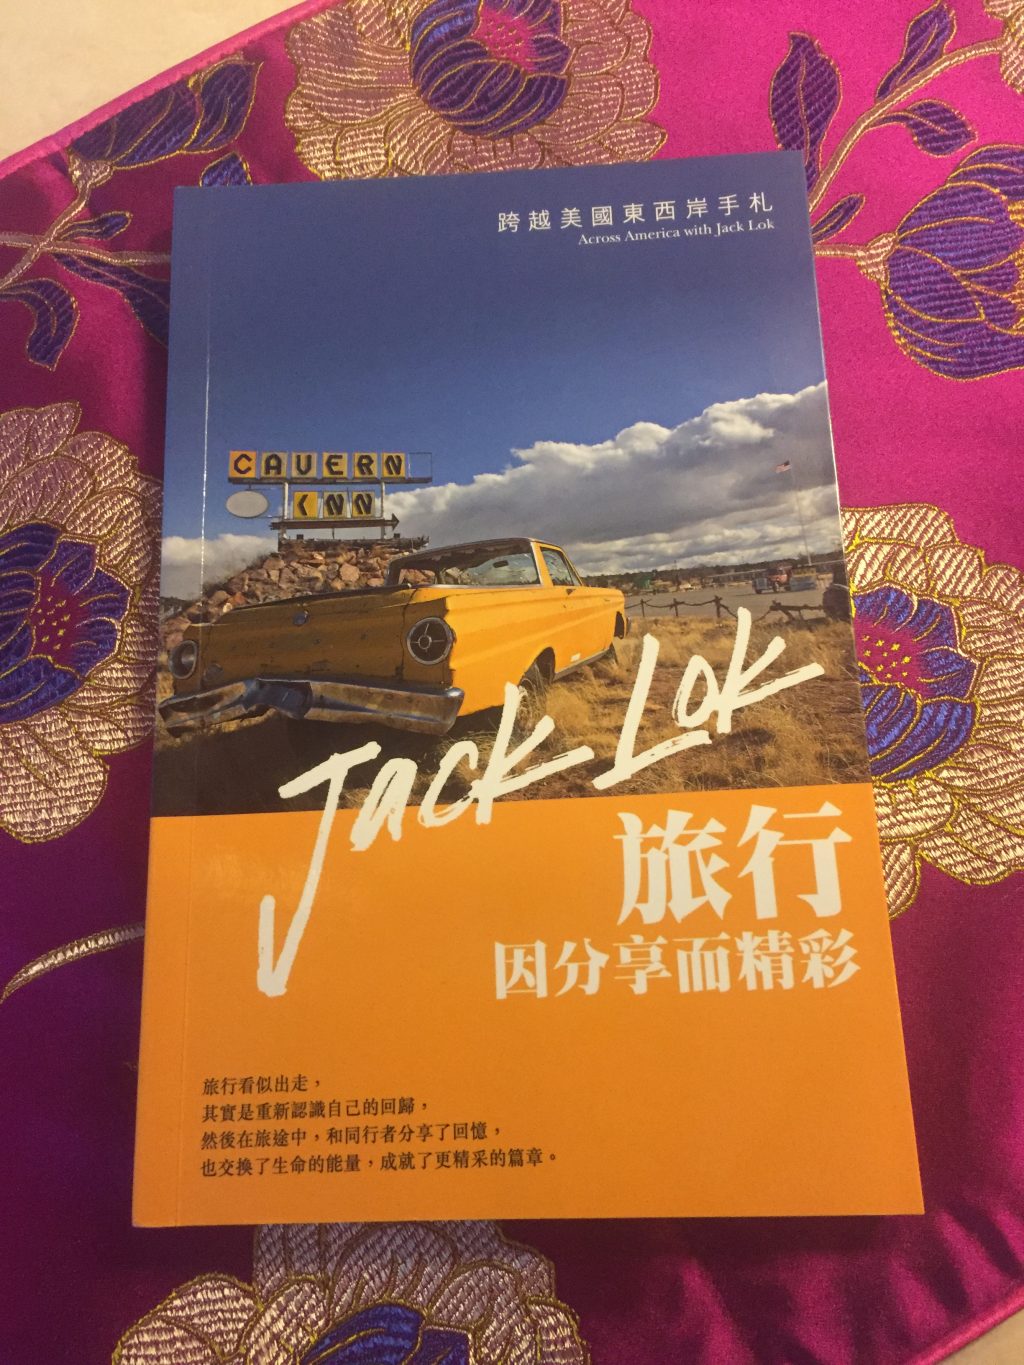 Jack's book